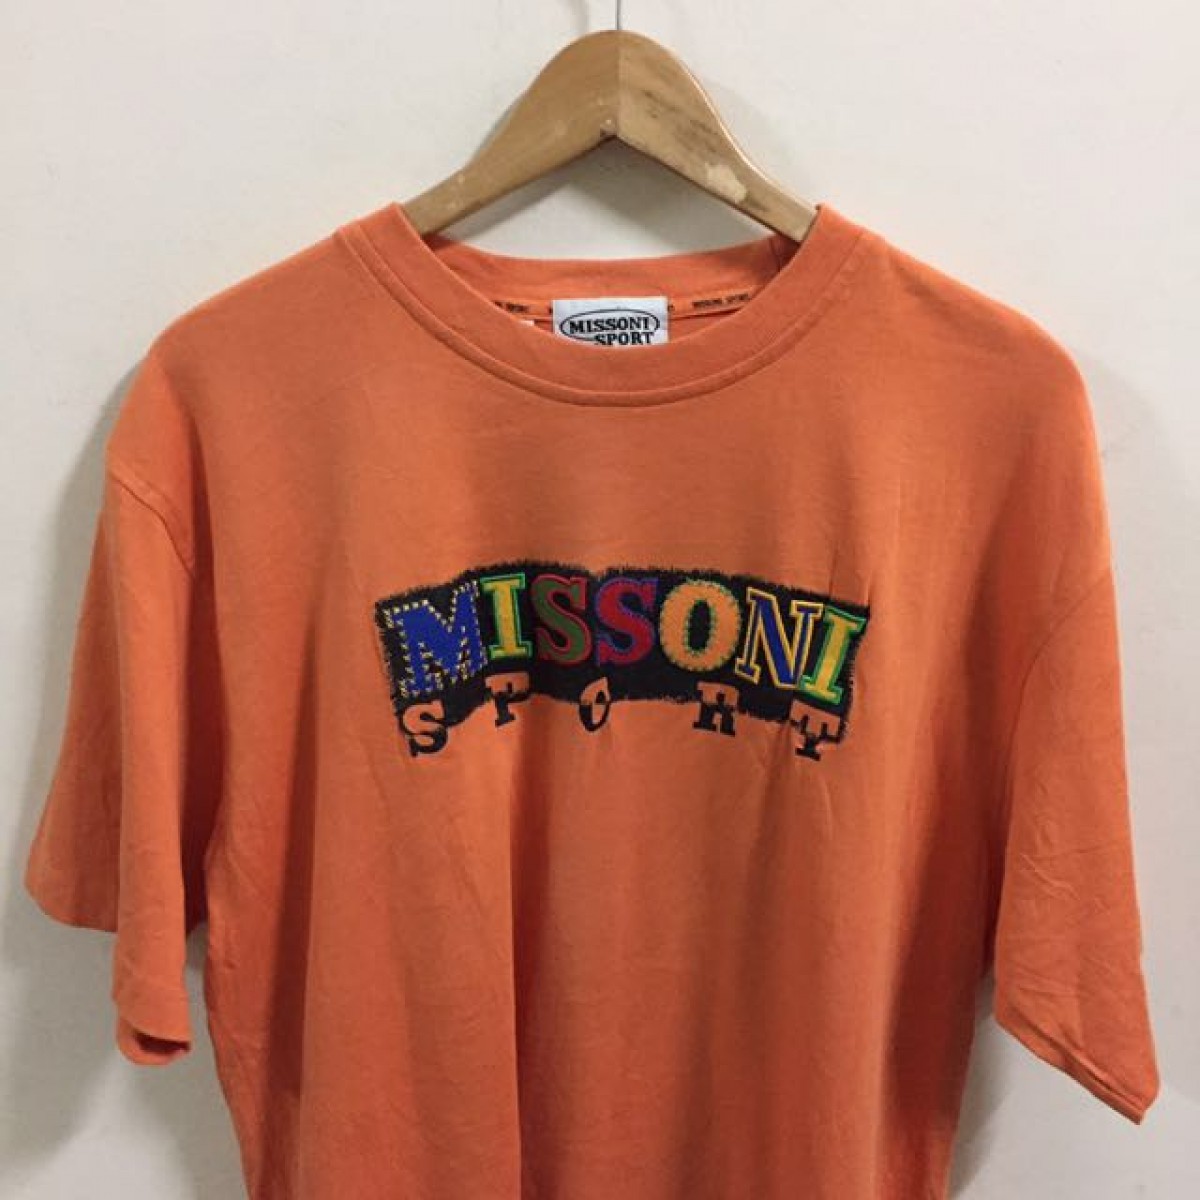 Missoni Sport Logo shirt size L large orange - 2